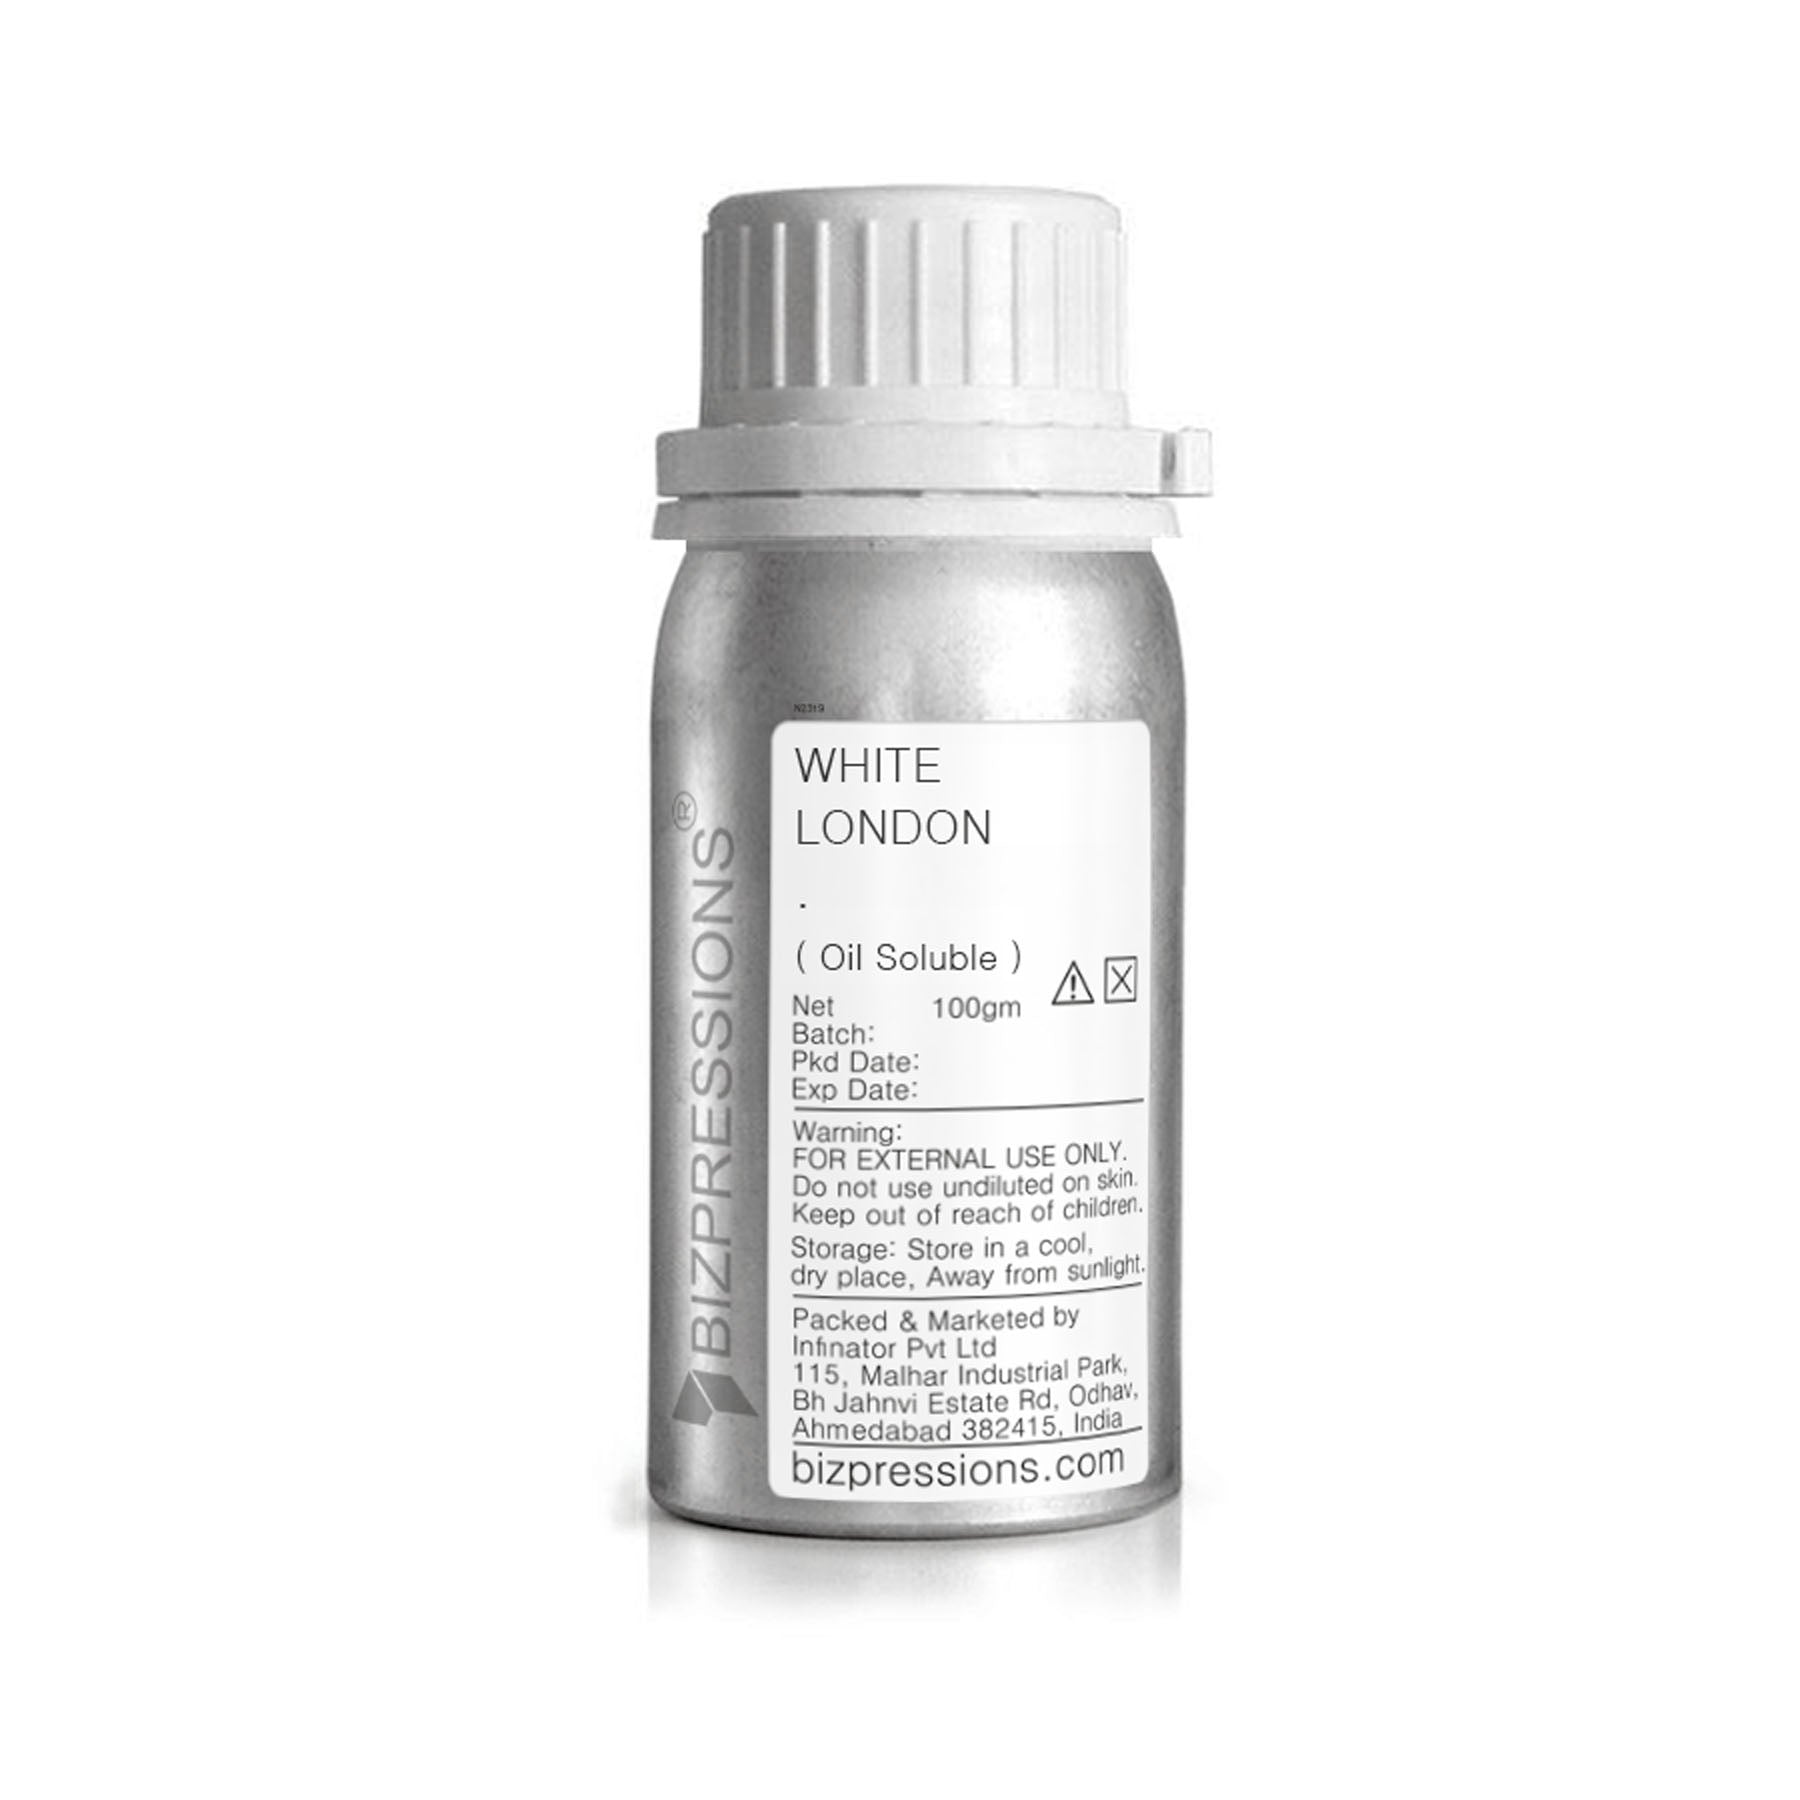 WHITE LONDON - Fragrance ( Oil Soluble ) - 100 gm